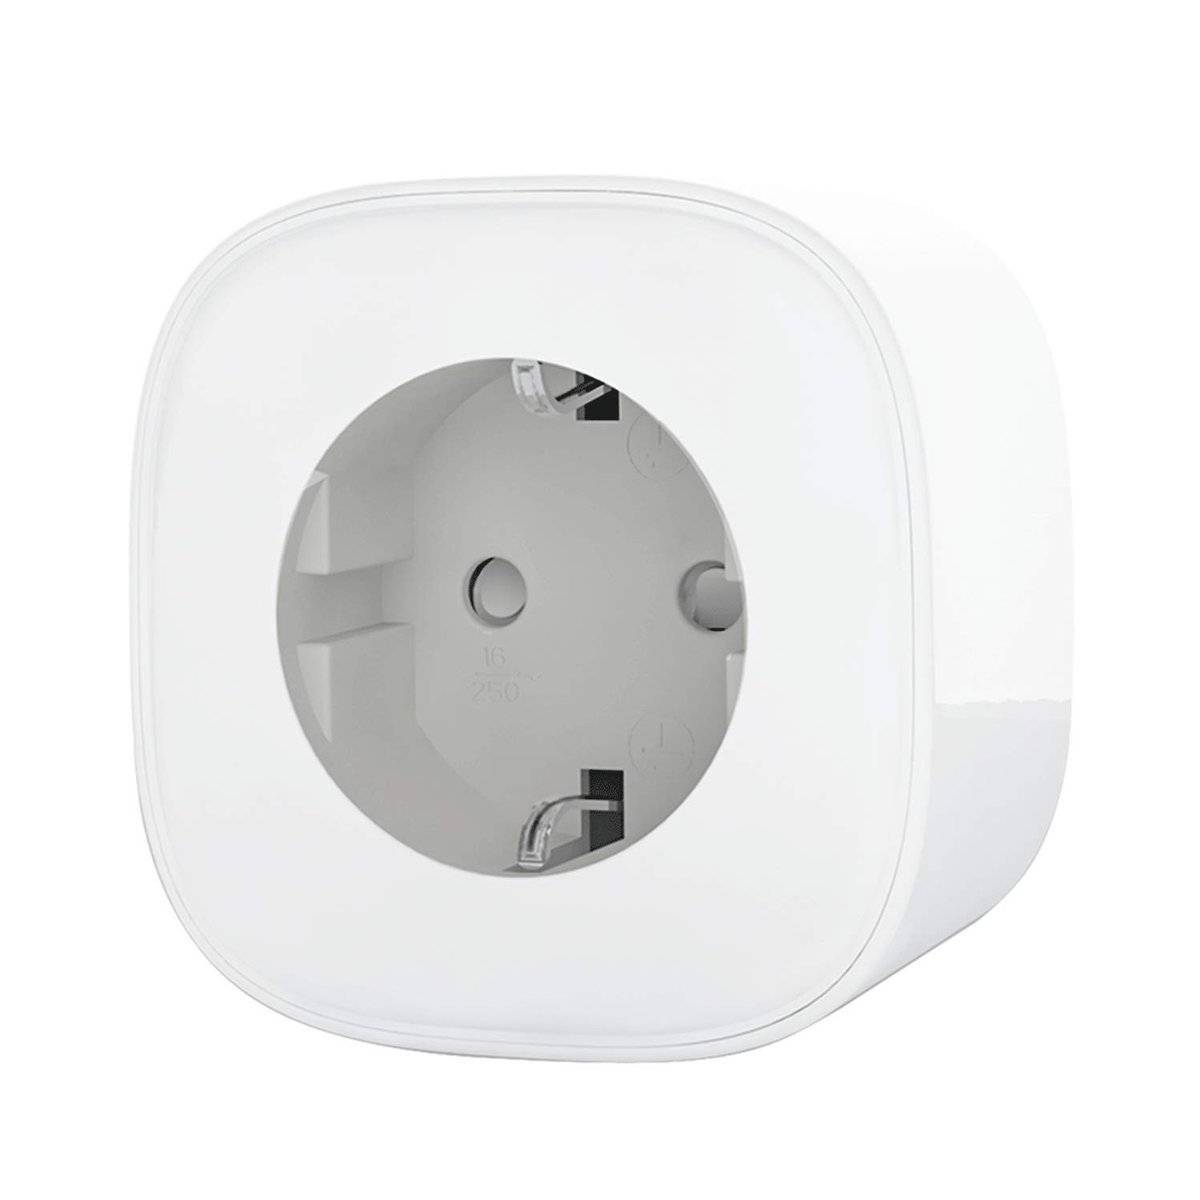 Prise Connectée blanc Meross MSS210 télécommande WiFi Smart Power Socket  Fonctionne avec  Alexa & Assistant Google, AC 100-240V, UK